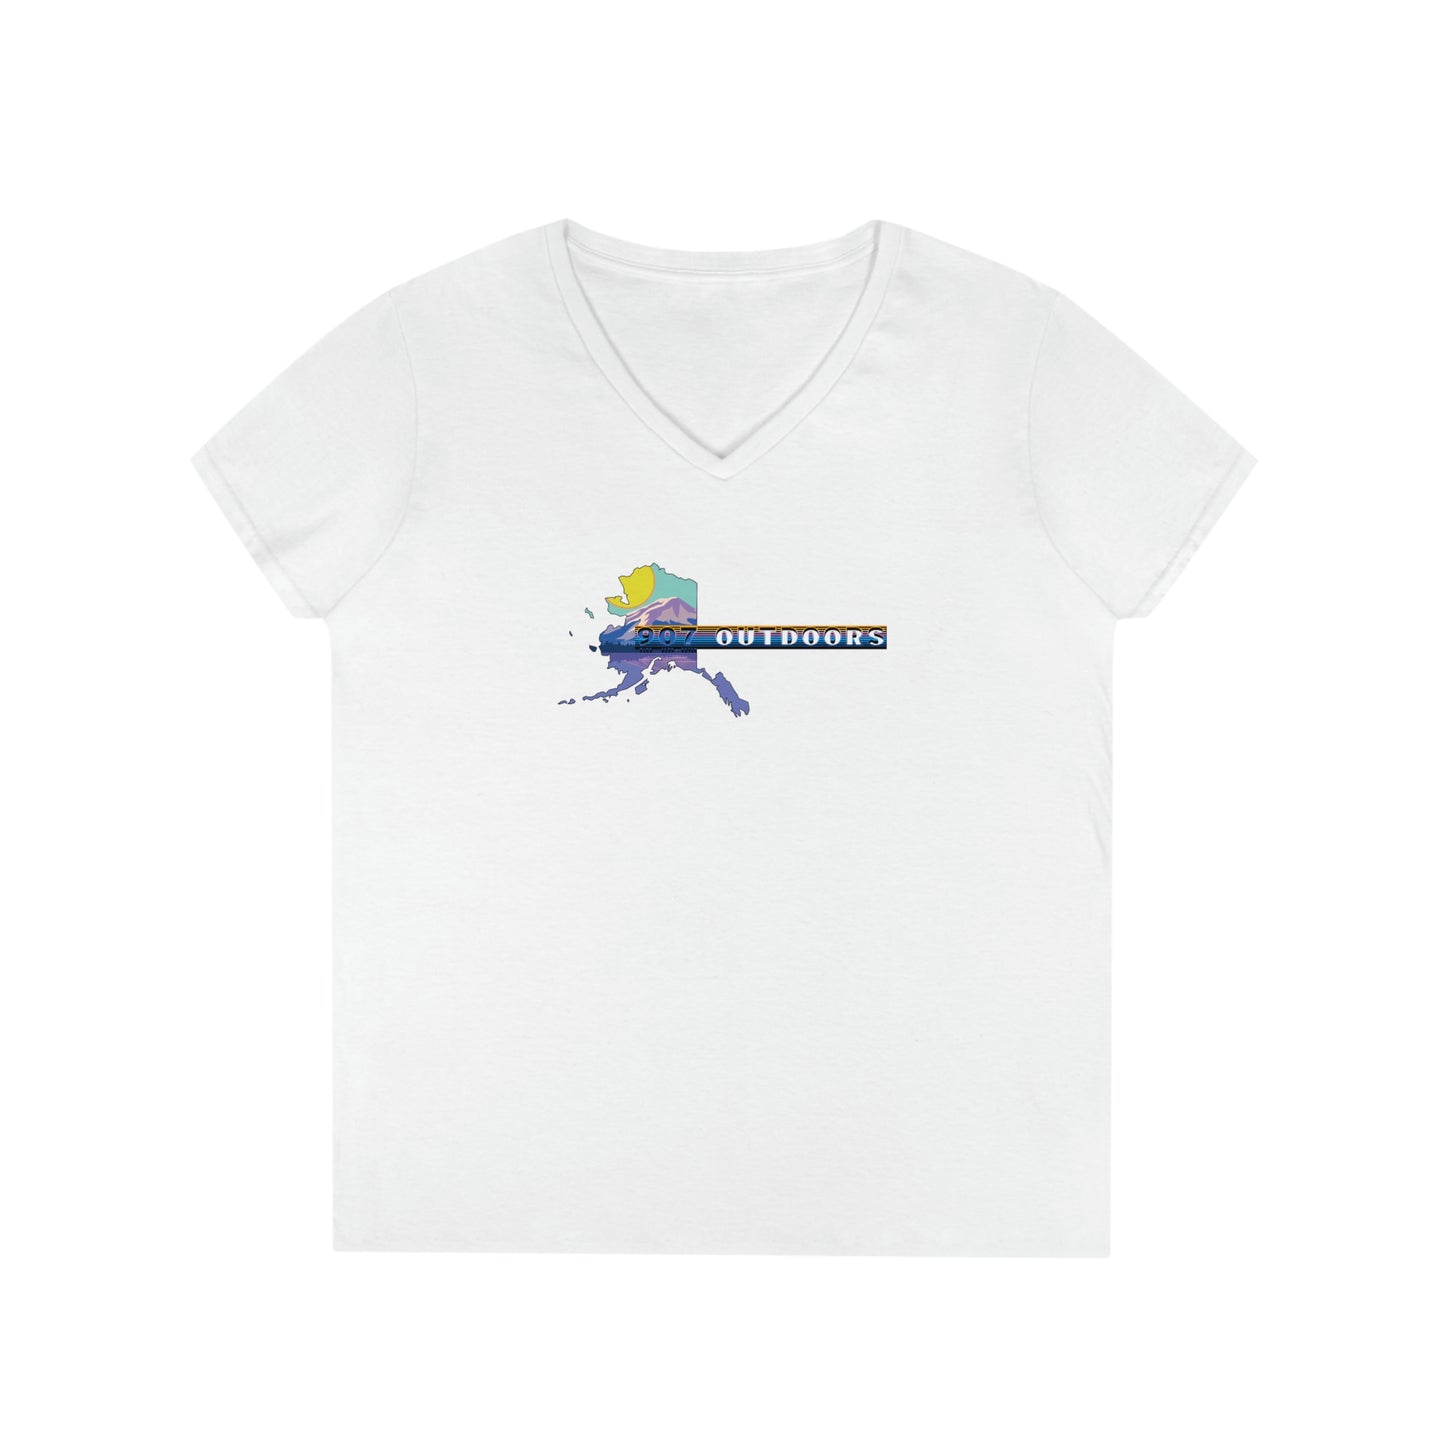 Retro Ladies' V-Neck T-Shirt - 907Outdoors